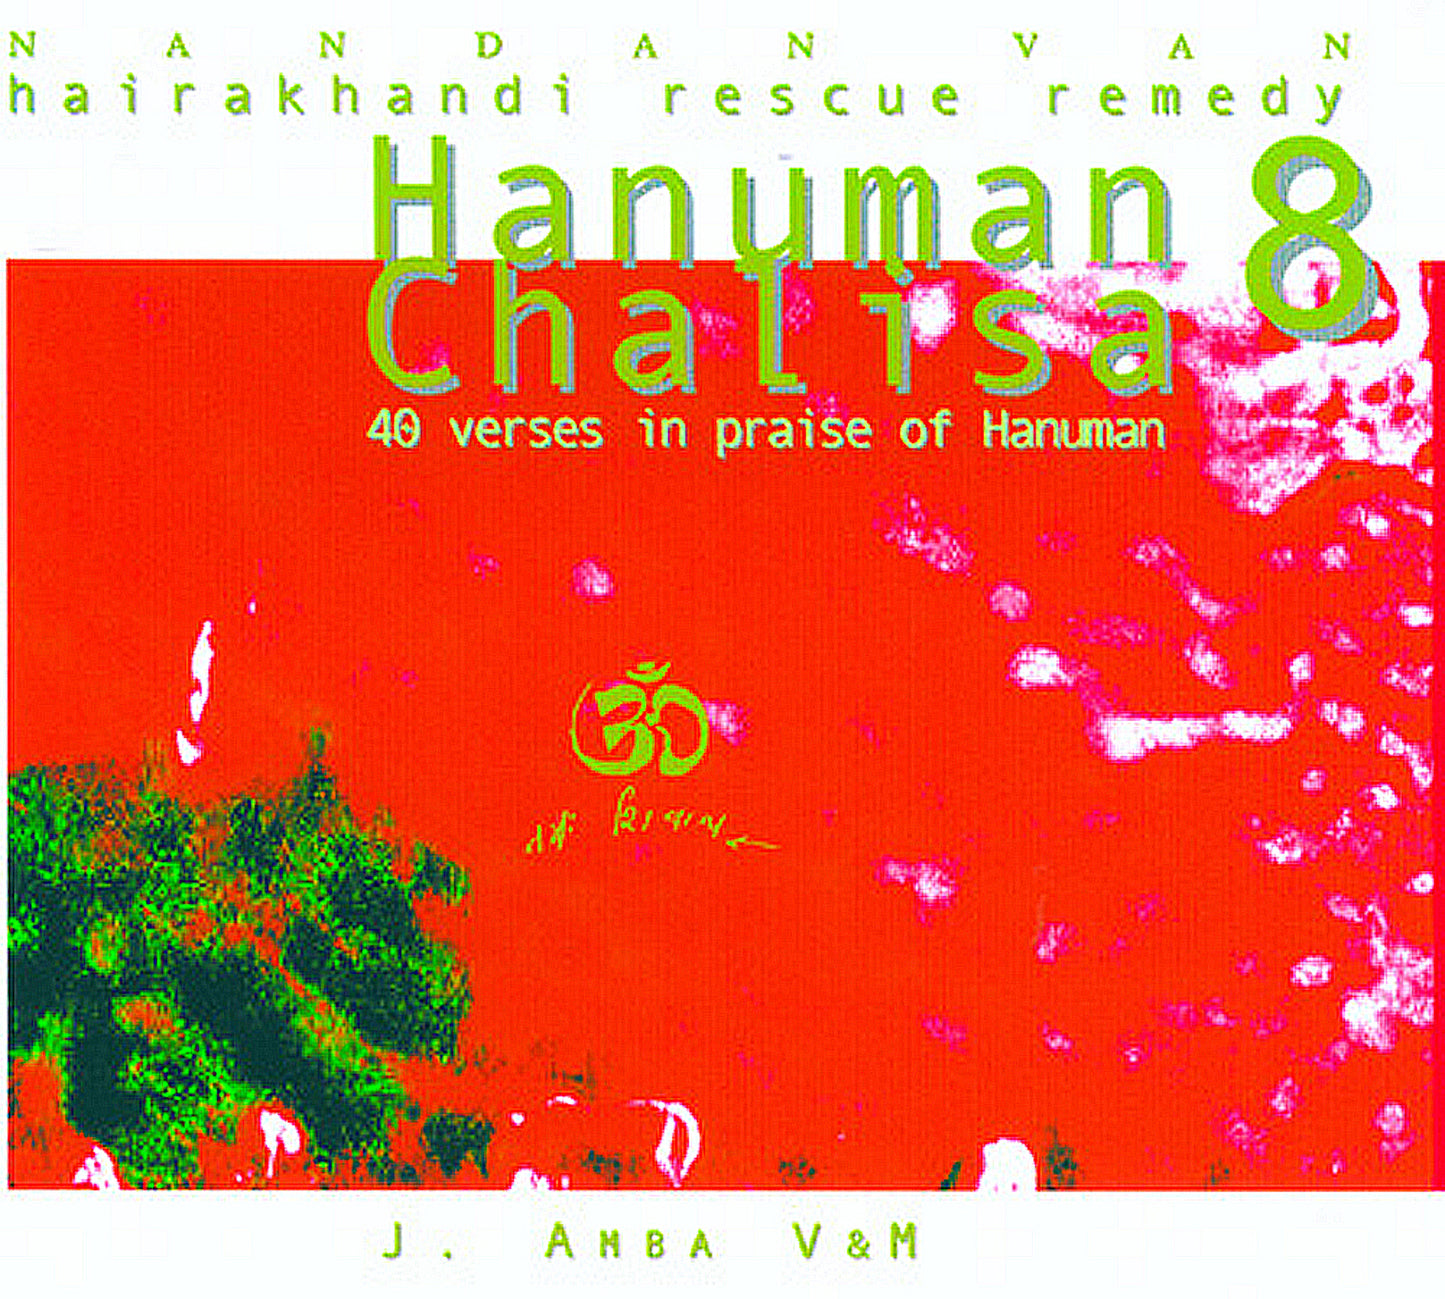 Hanuman Chalisa, 40 Verses in praise of Hanuman, Bhajans - Hairakhandi Rescue Remedy 08 - Hindu Sanatan Dharma Spirituality Music Therapy for Meditation